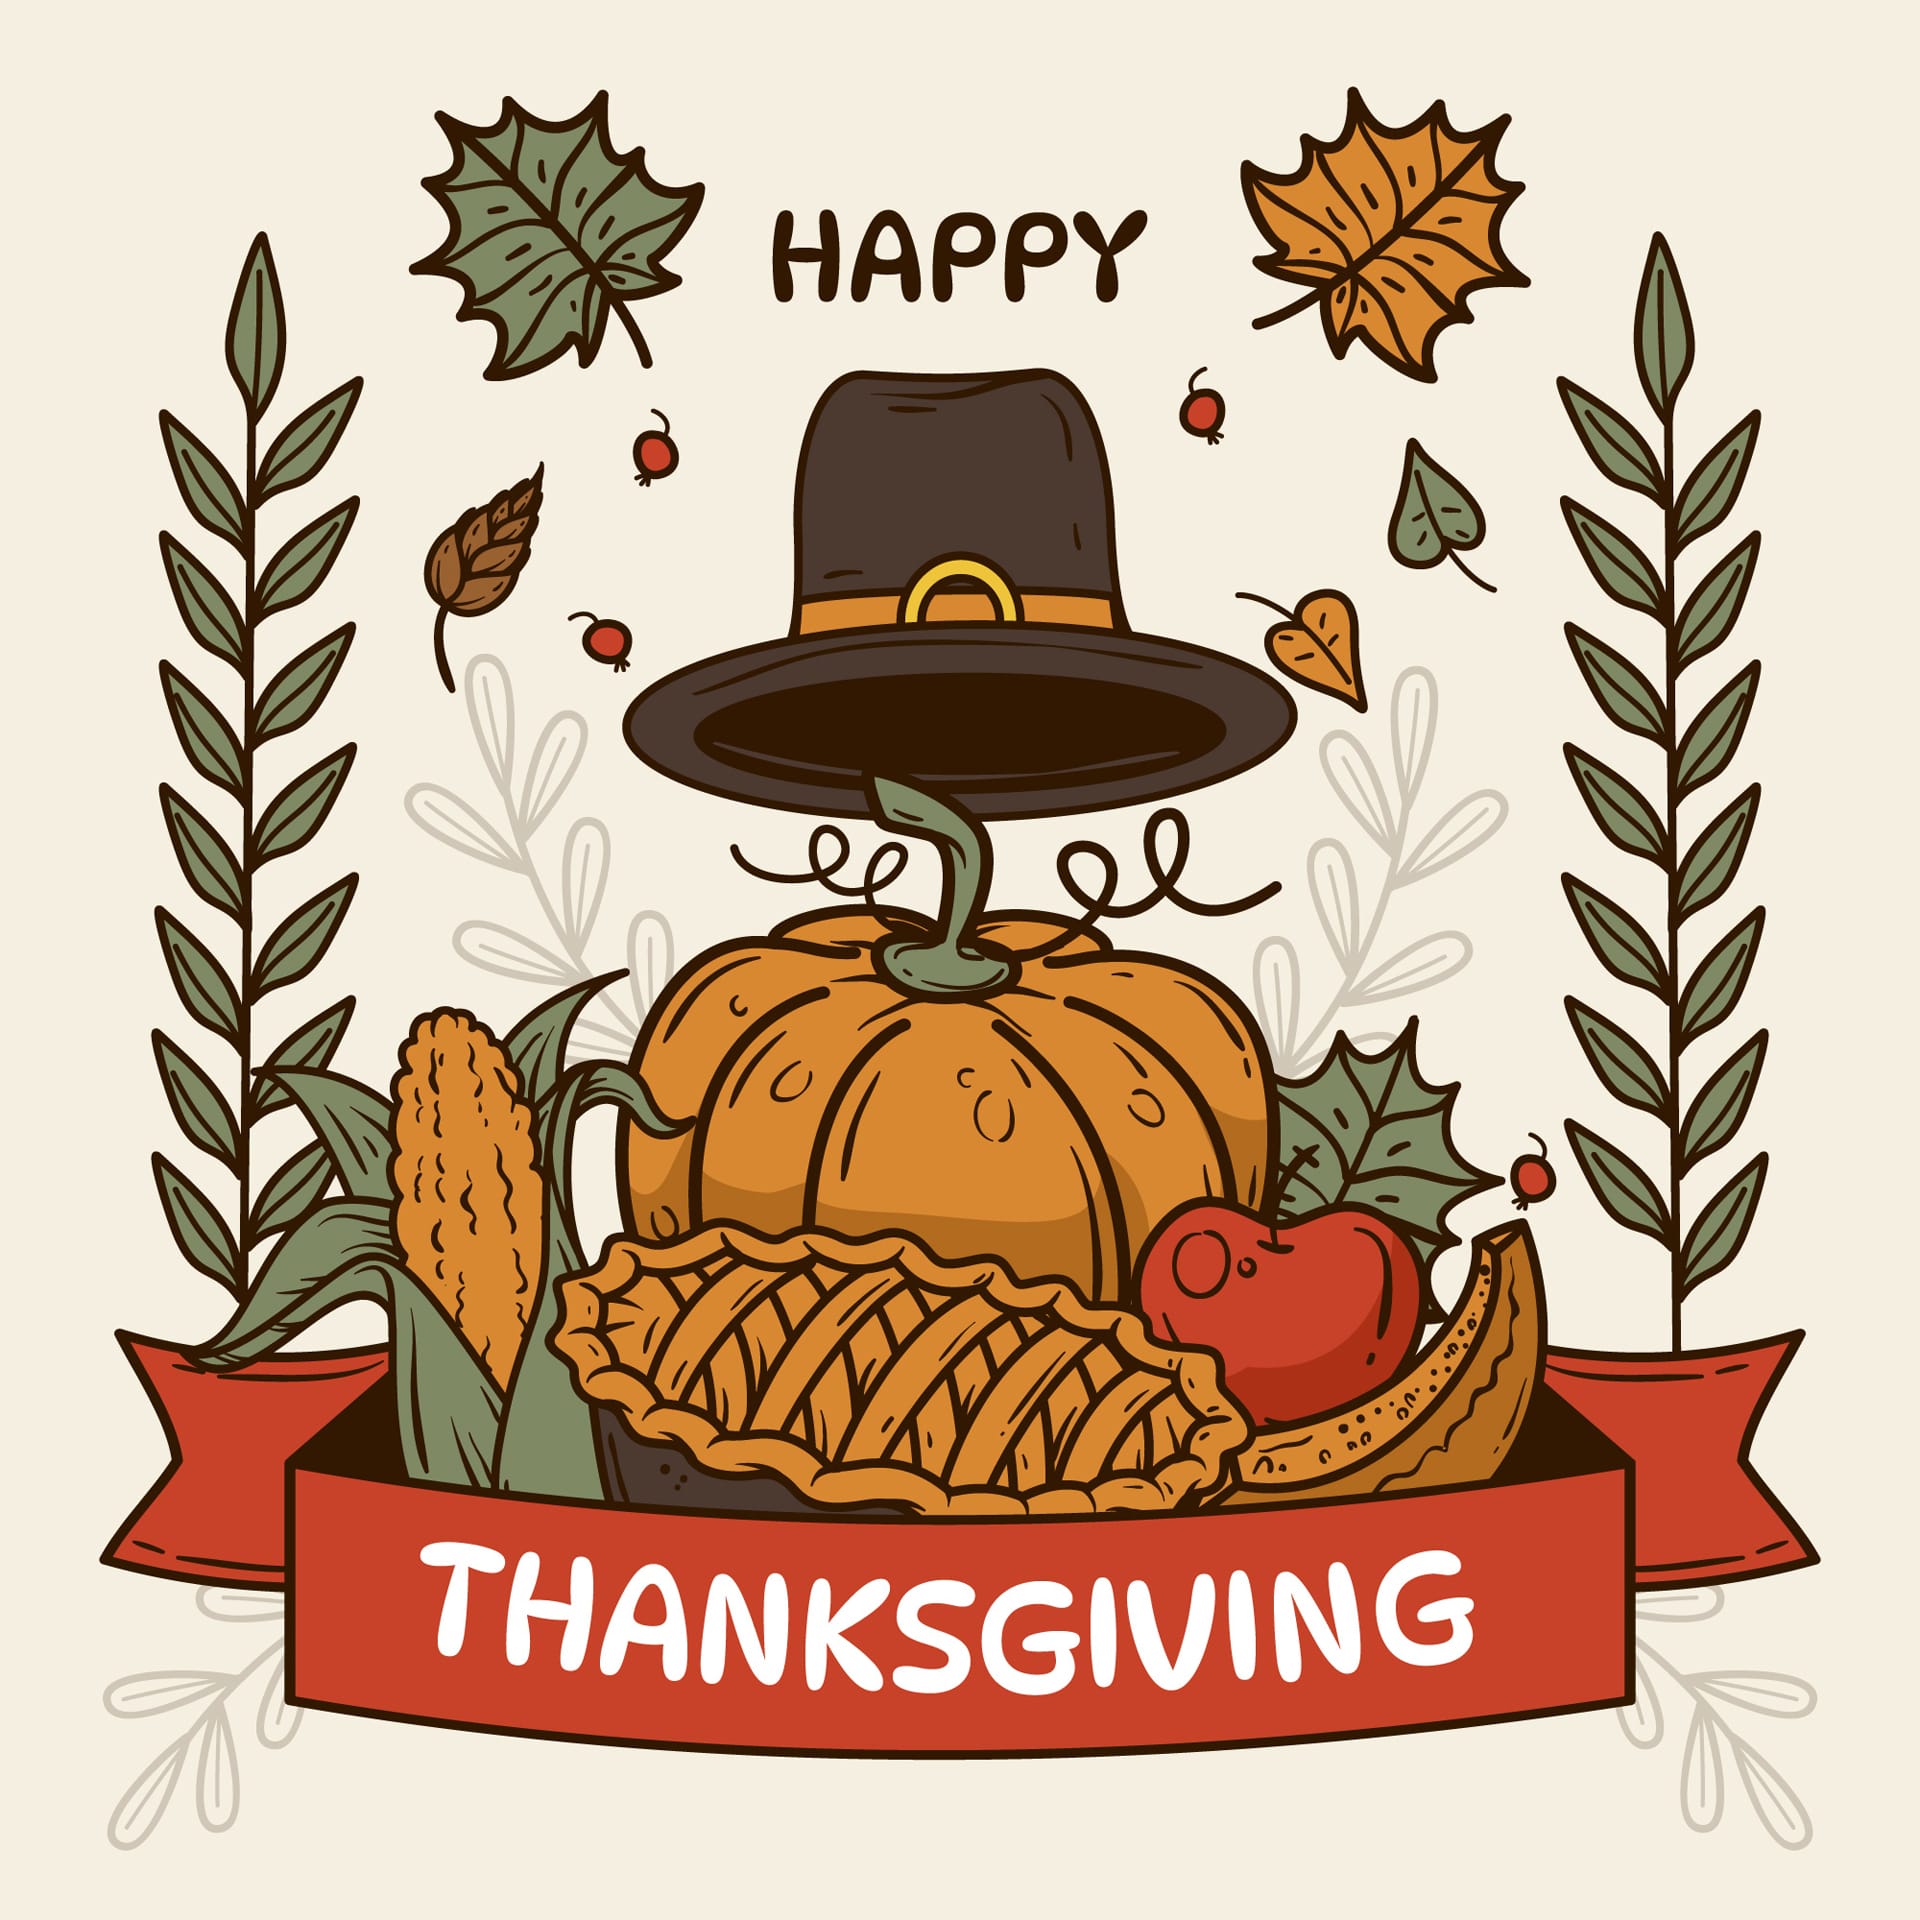 Hand drawn thanksgiving celebration illustration happy thanksgiving images